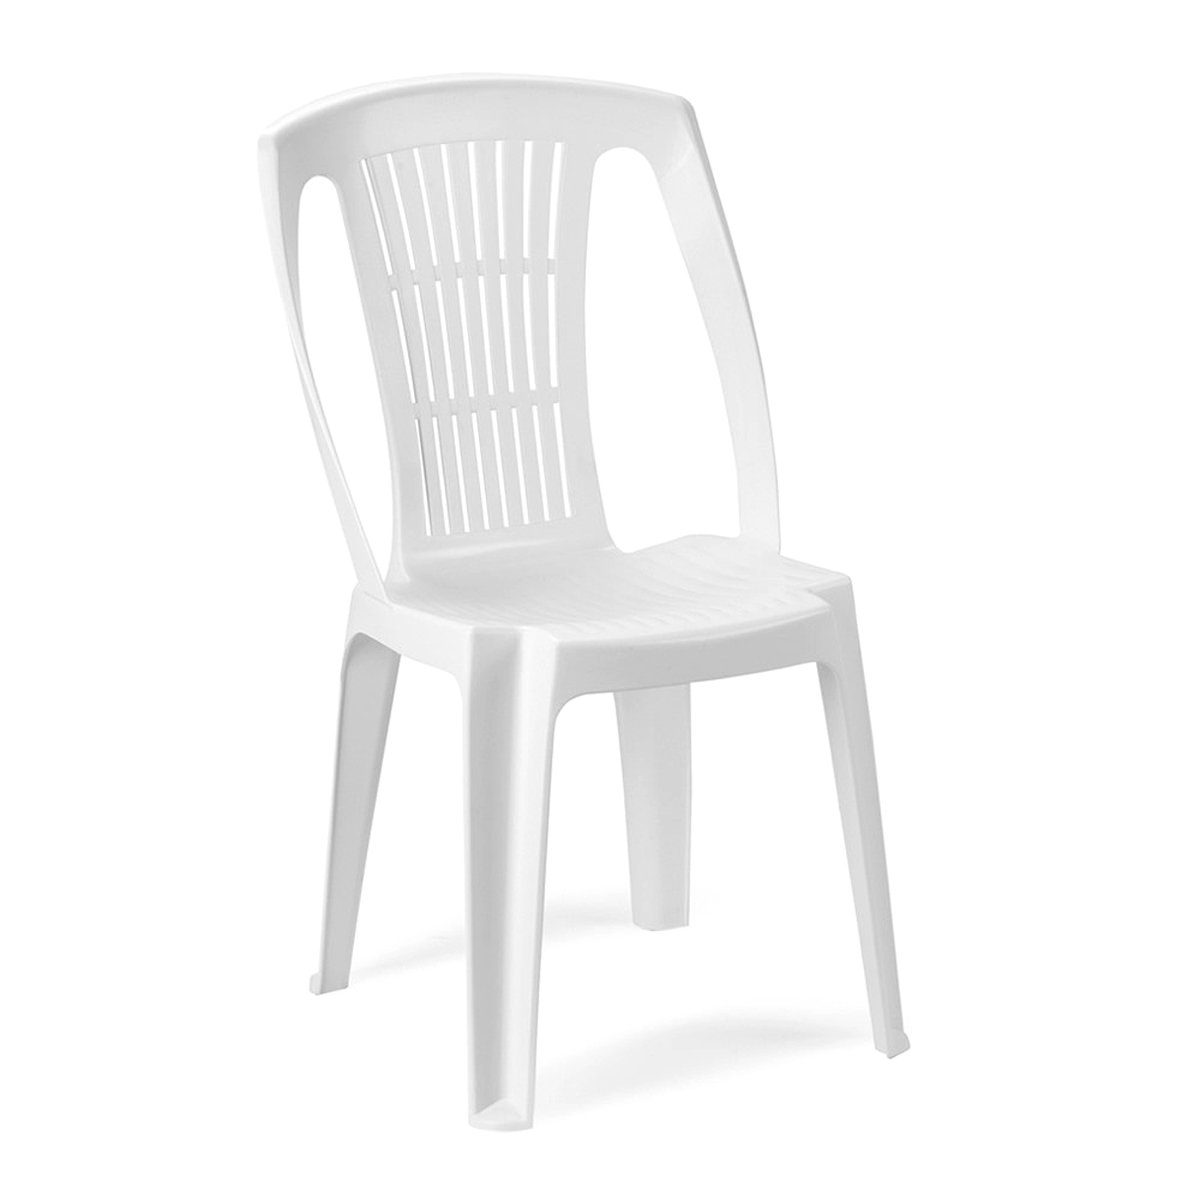 INDA-Exclusiv Armlehnstuhl 4 Stück Stapelstuhl Weiß Stapelsessel Gartenstuhl Kunststoff